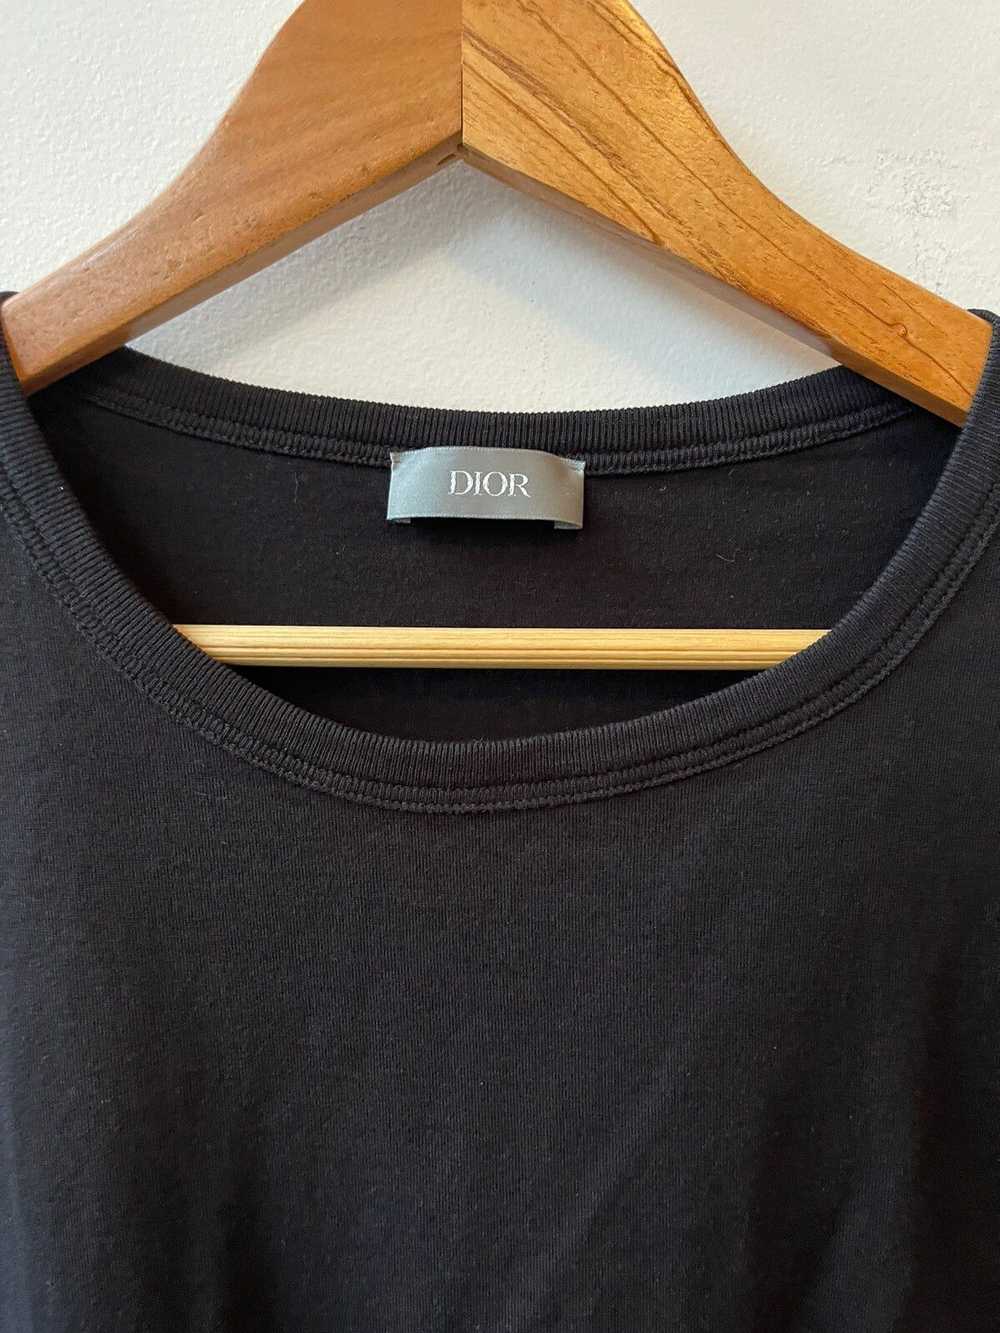 Dior Dior Icon Slim Fit T shirt $850 - image 2